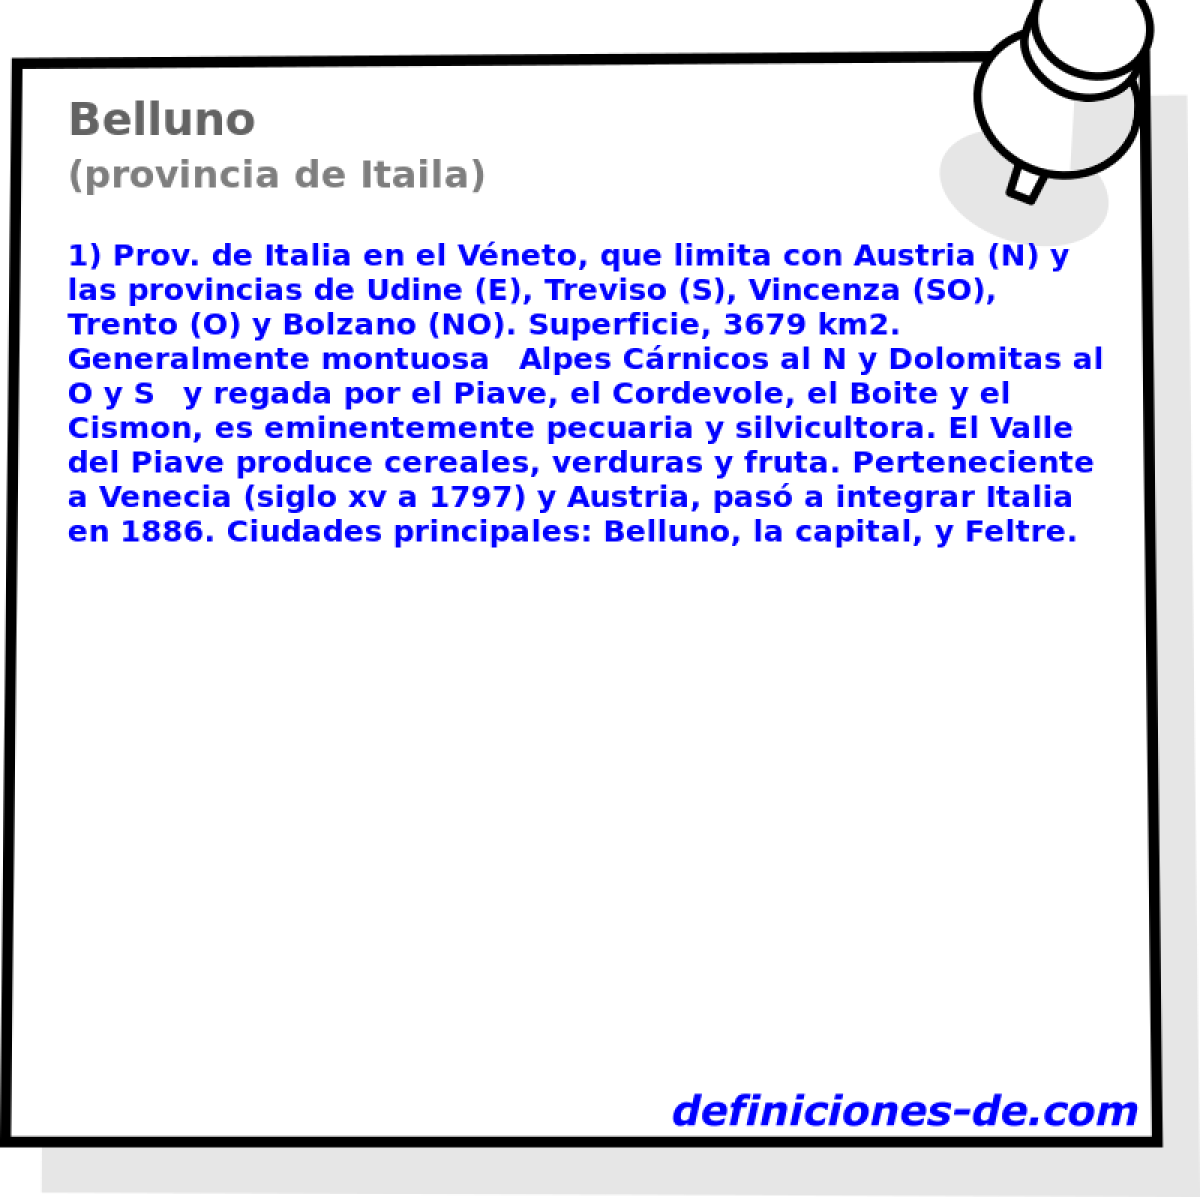 Belluno (provincia de Itaila)